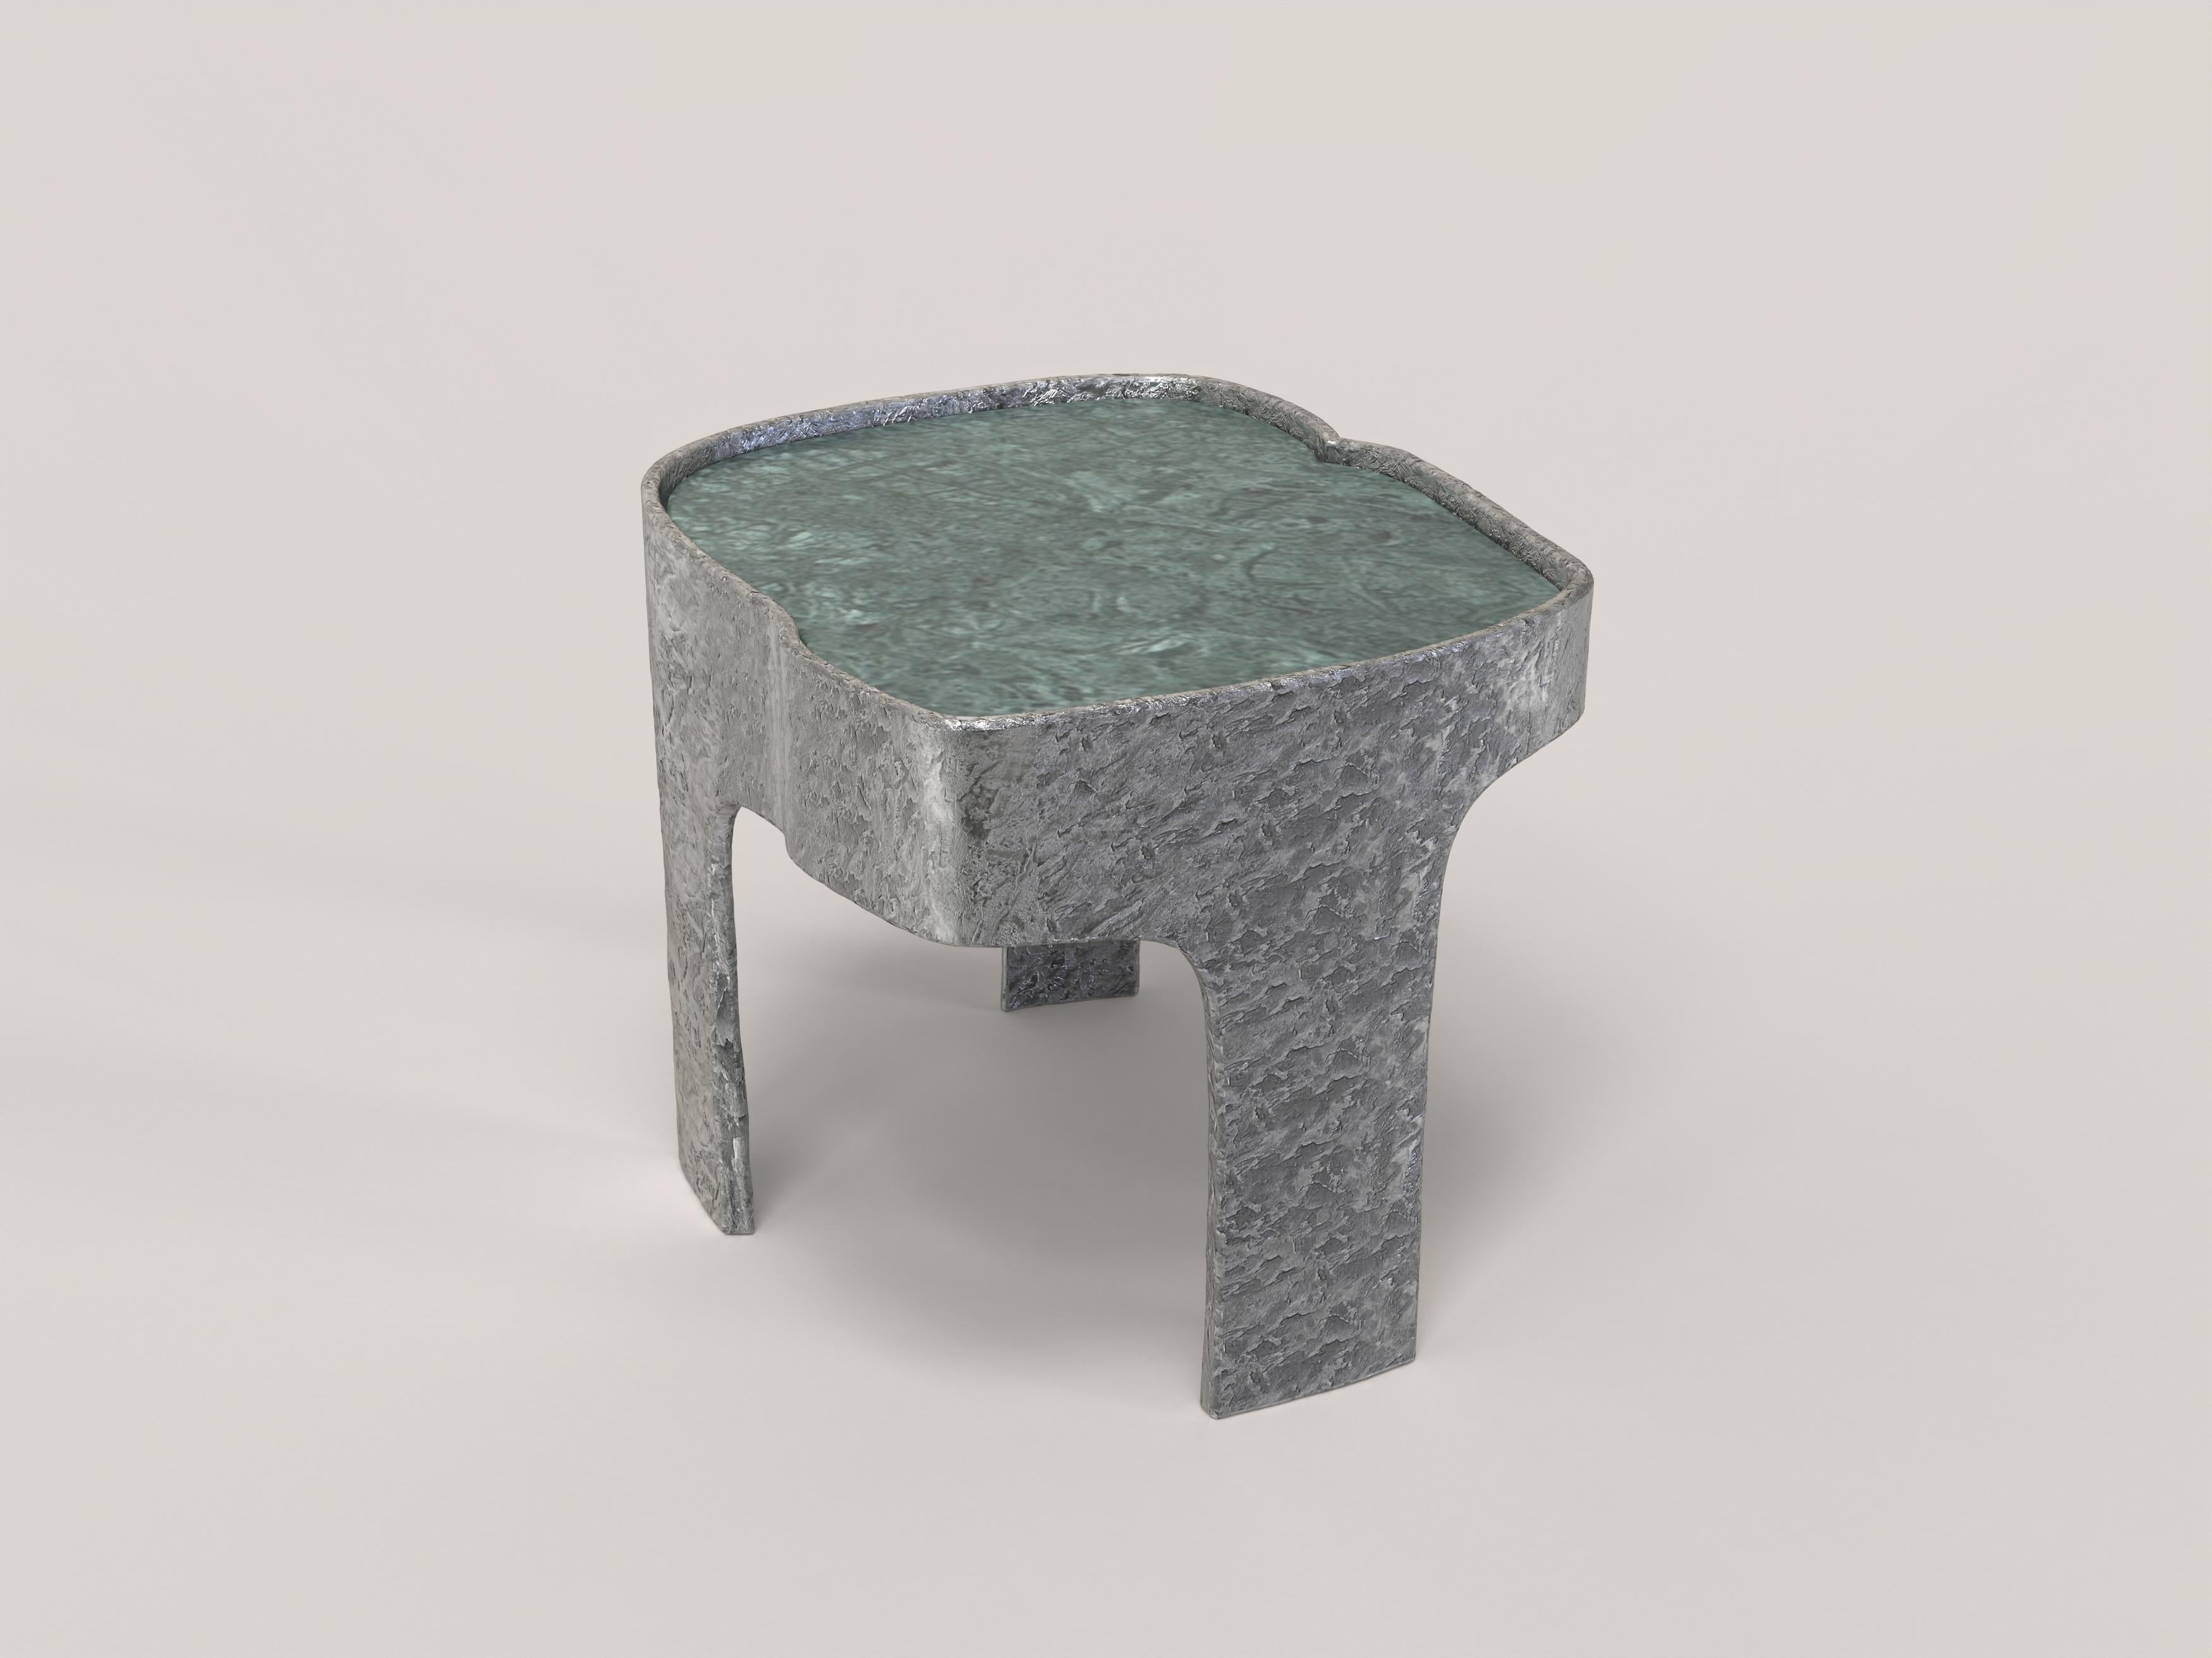 Limited Edition Marble Aluminium Table, Sumatra V1 by Edizione Limitata In New Condition For Sale In Milano, IT